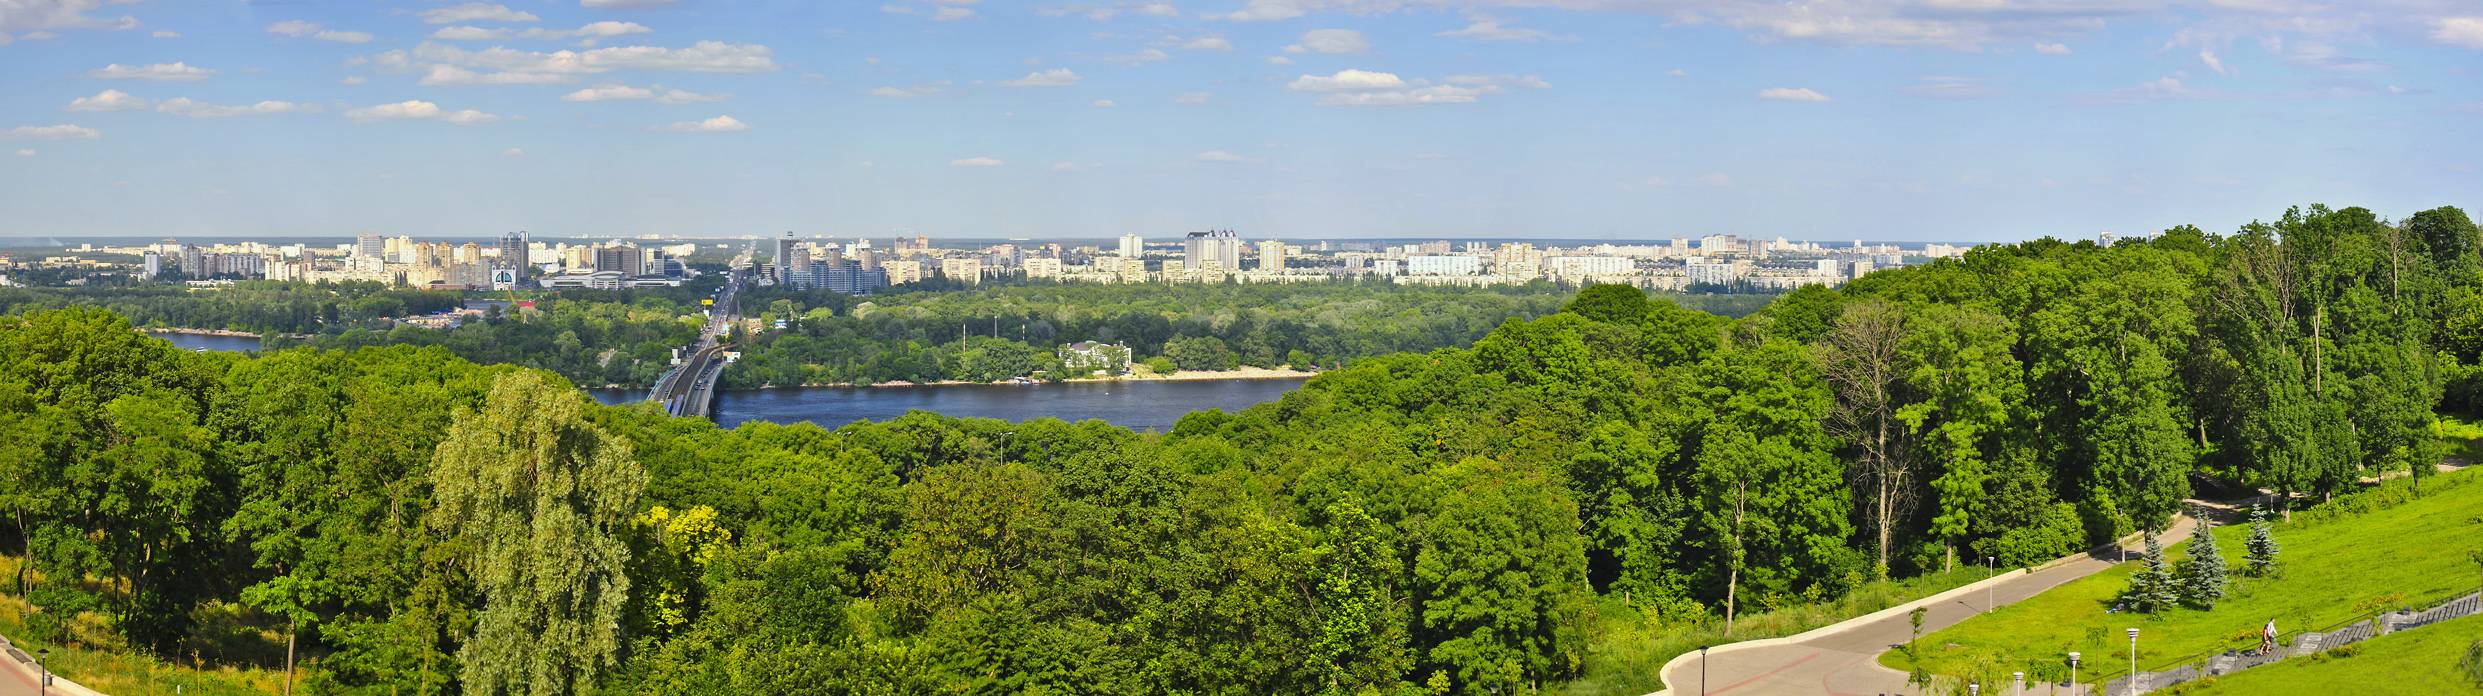 Панорама левого берега Киев